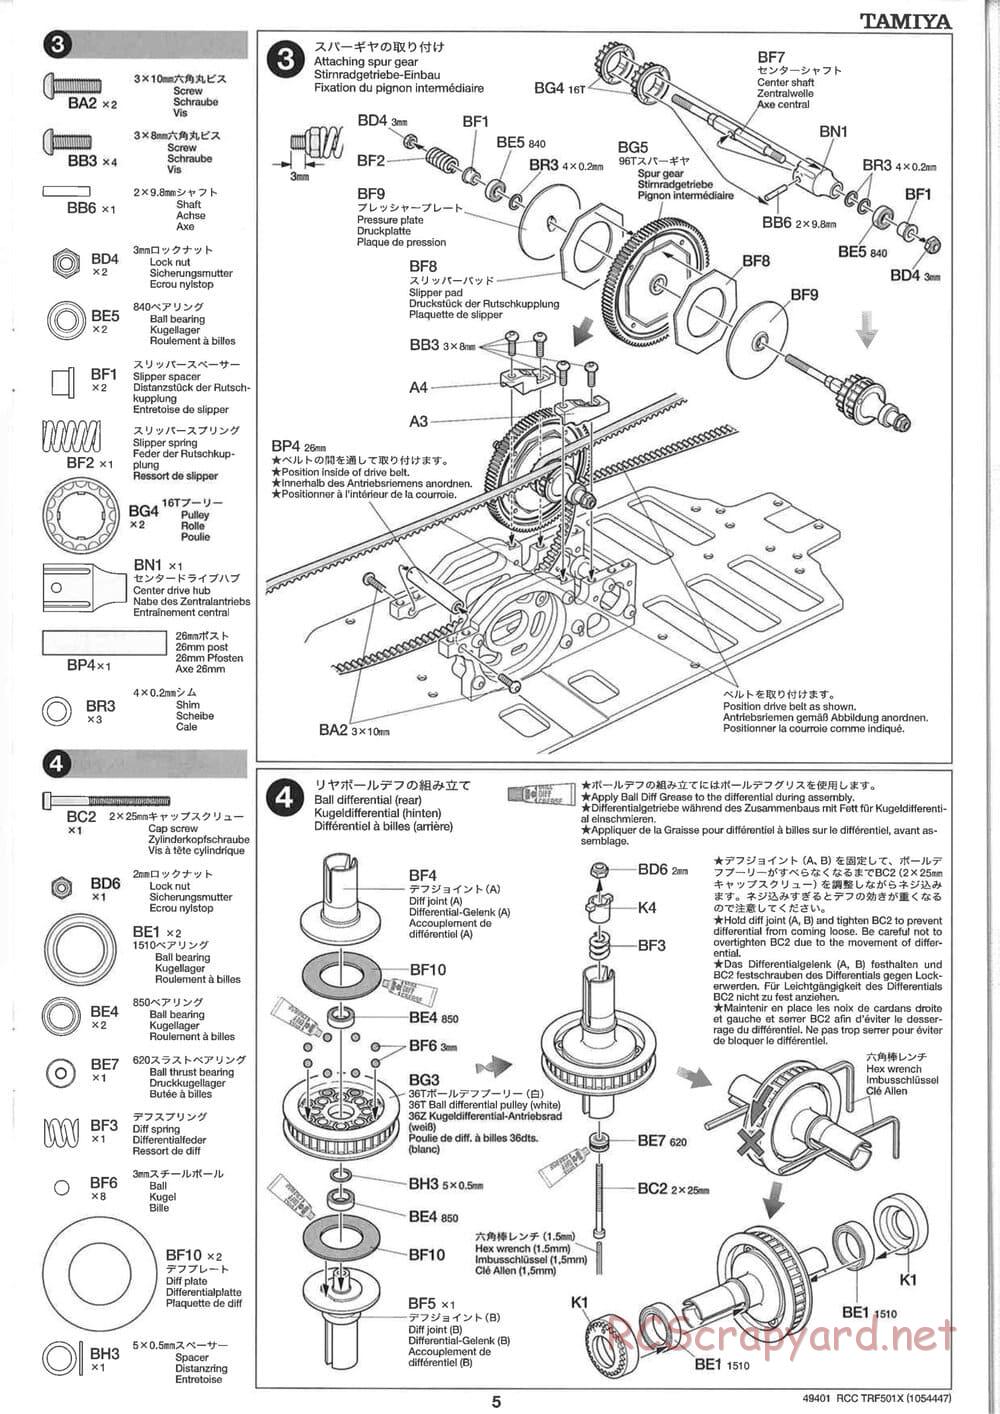 Tamiya - TRF501X Chassis - Manual - Page 5